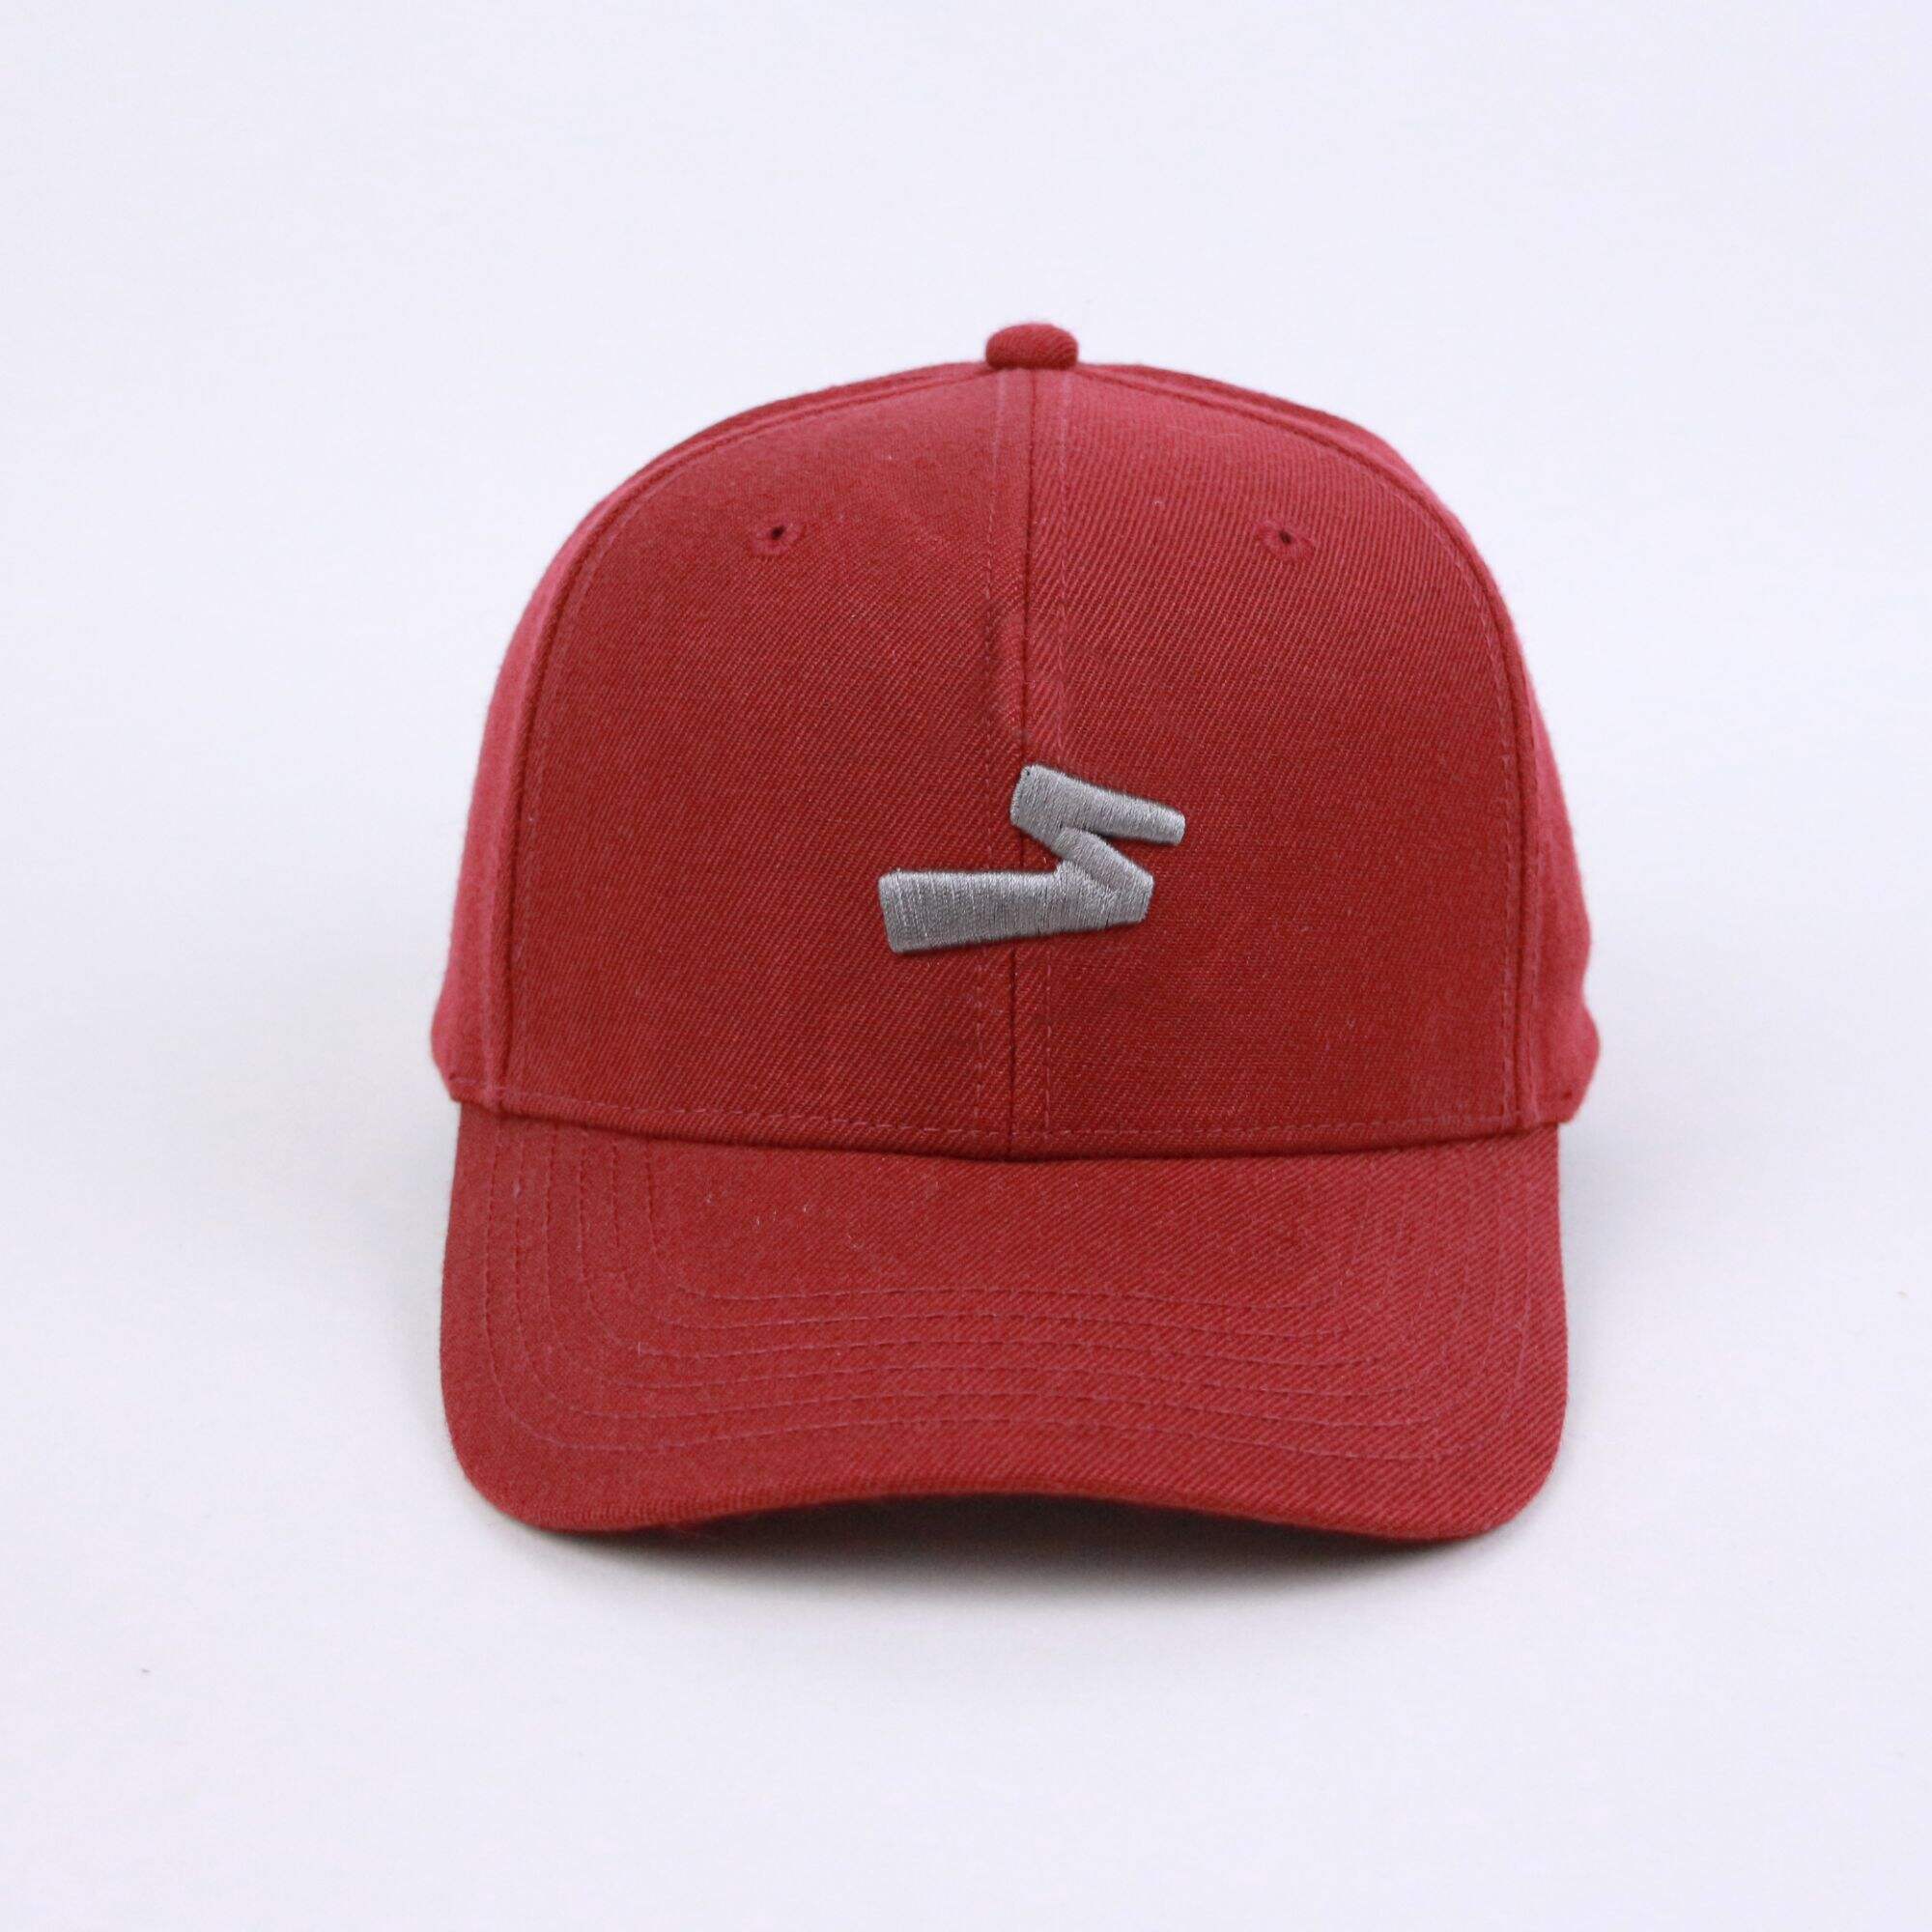 3D embroidered baseball cap